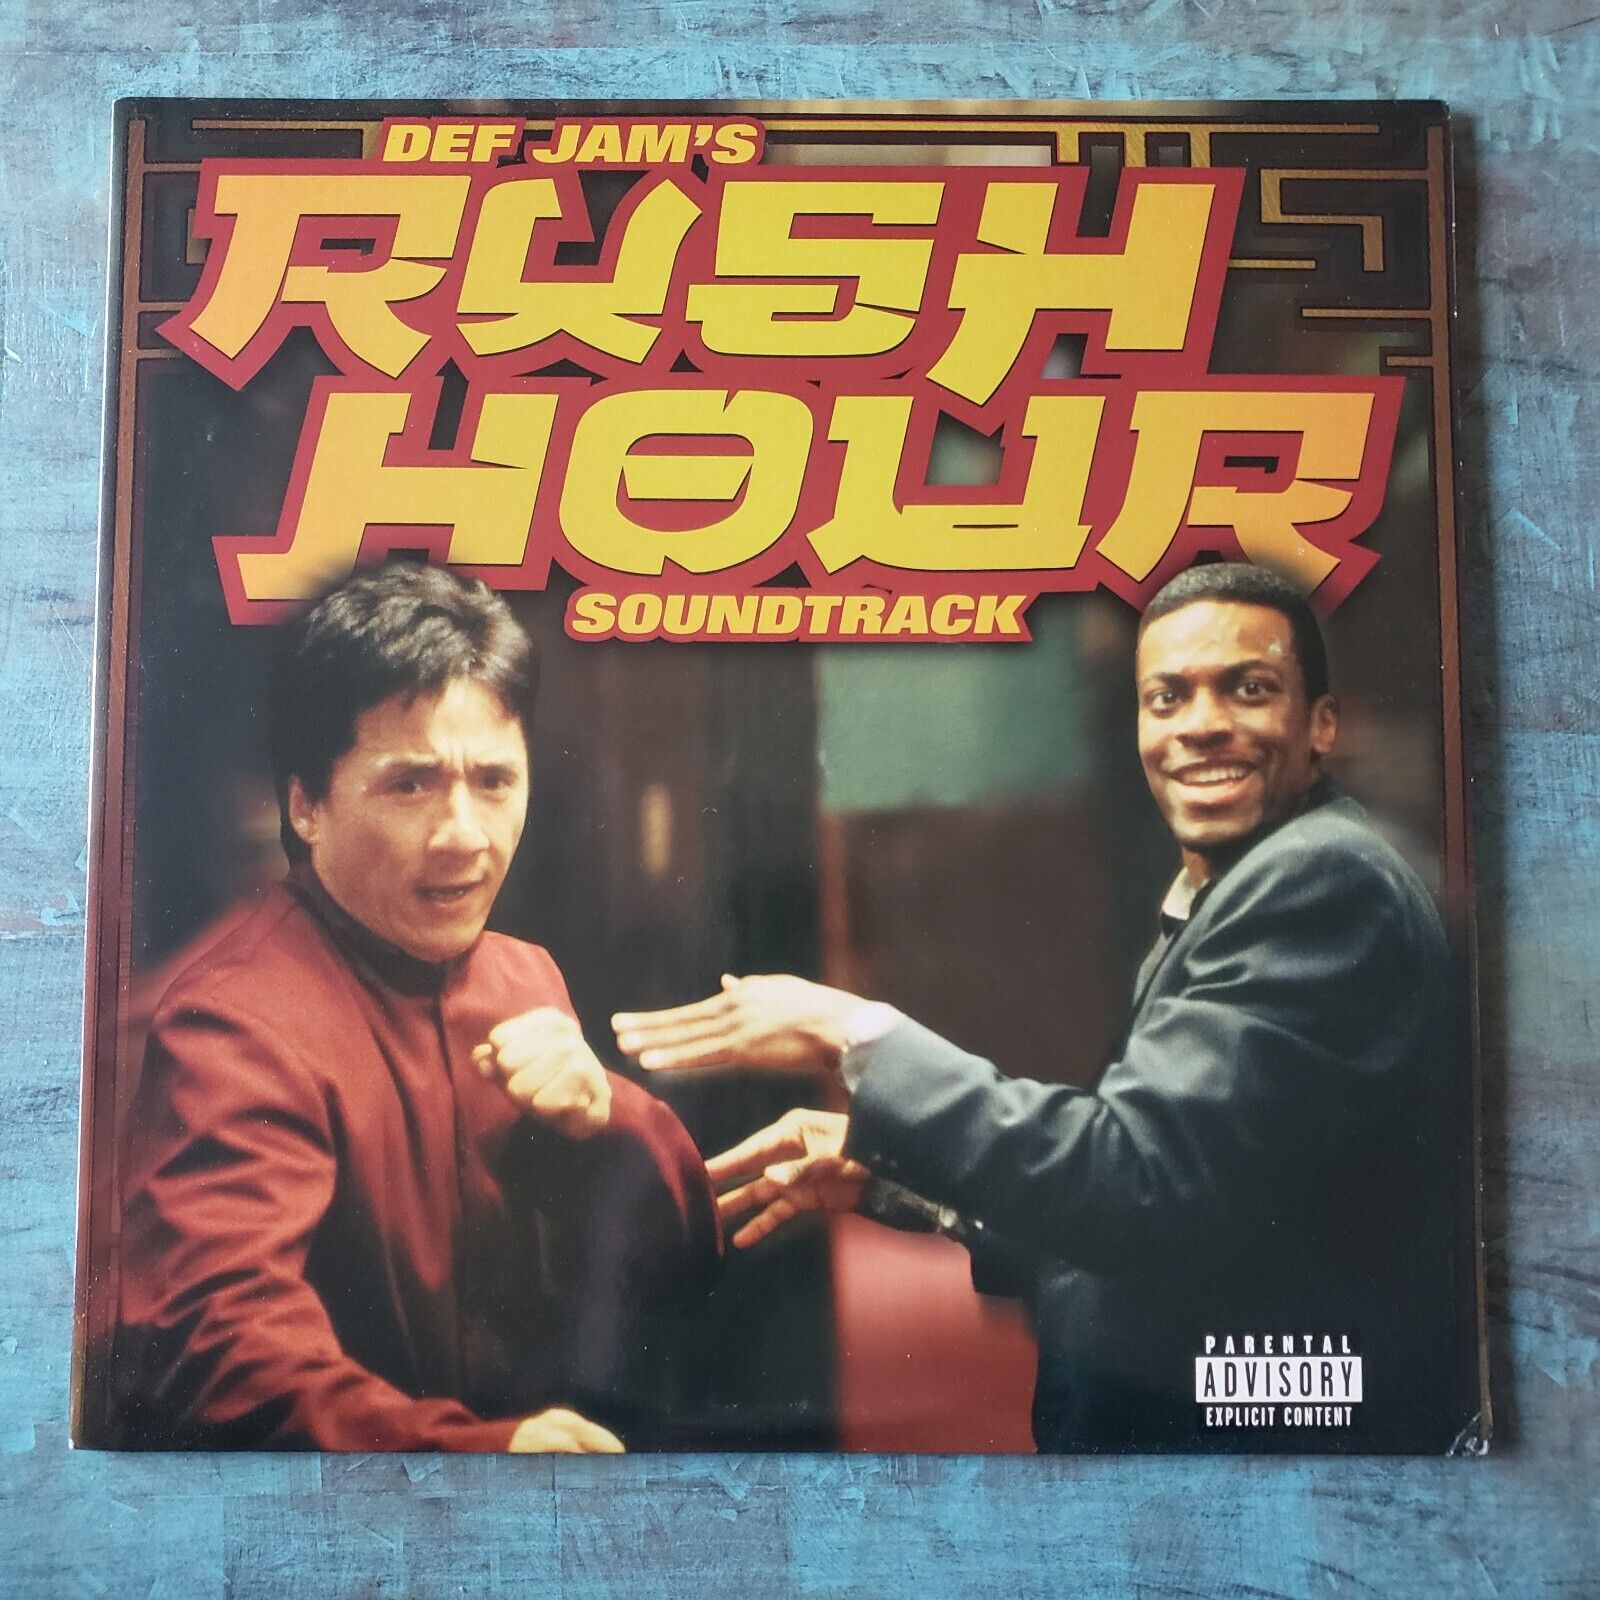 Def Jam's Rush Hour 2xLP Soundtrack